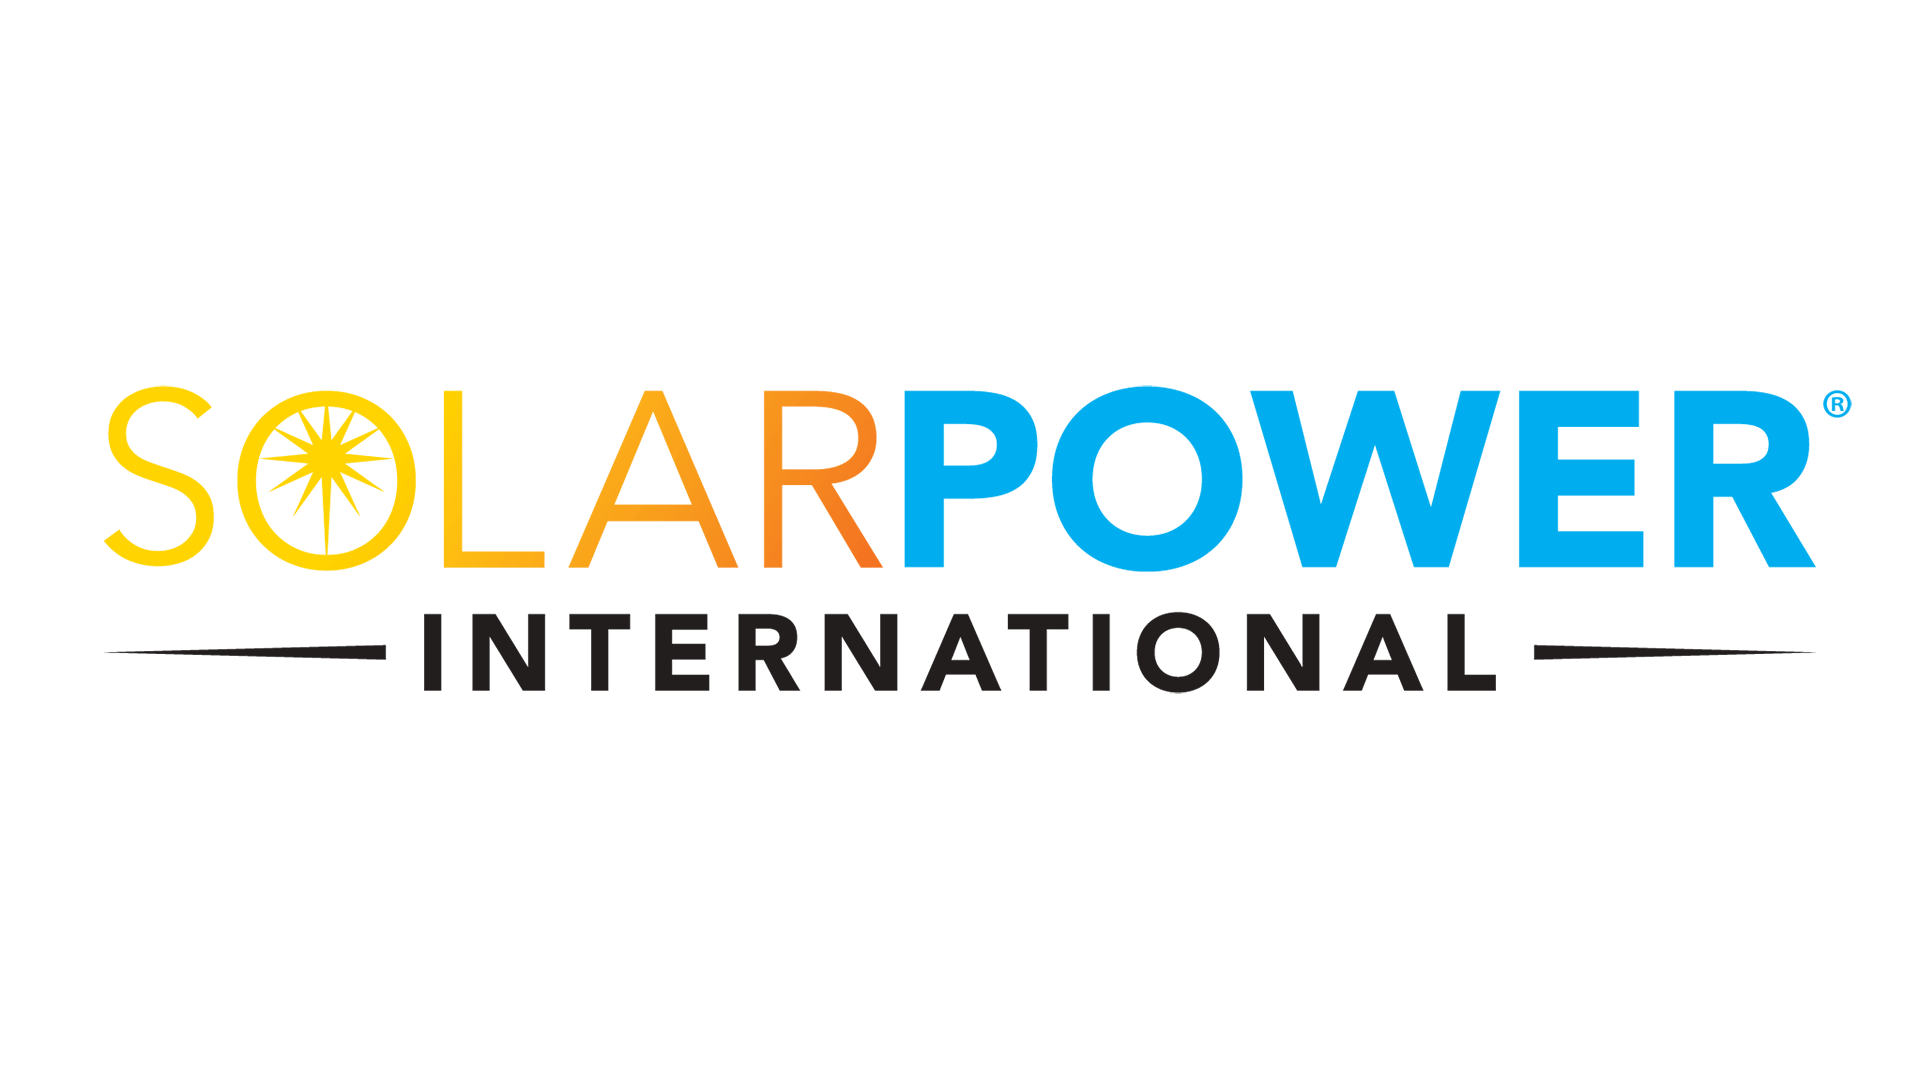 Power International.